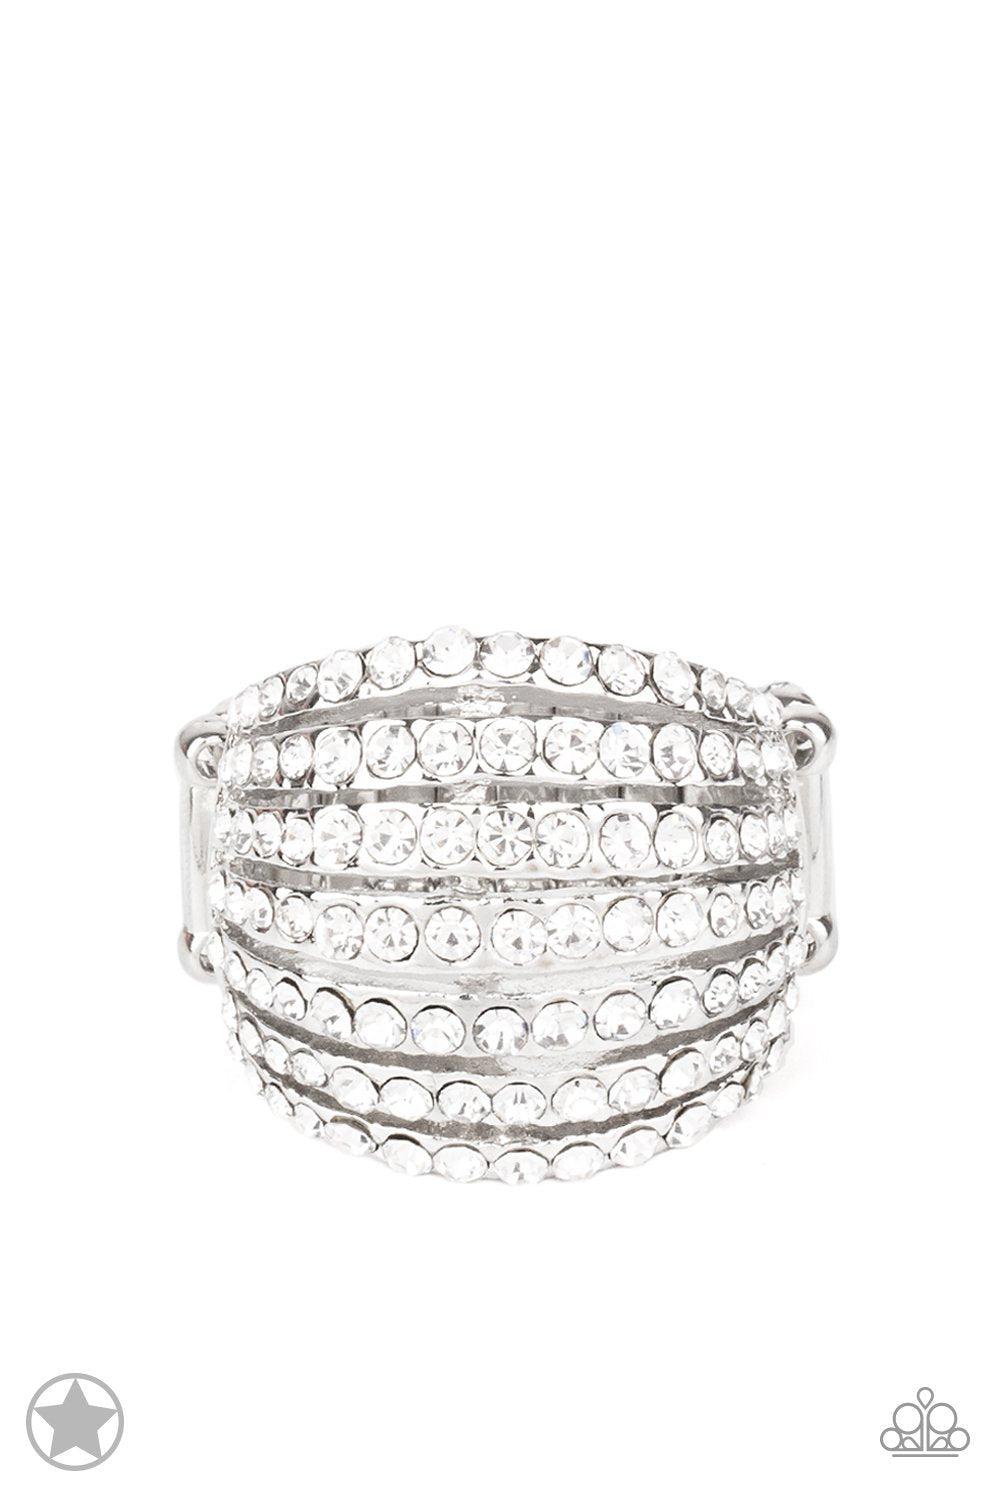 Blinding Brilliance White Rhinestone Ring - Paparazzi Accessories - lightbox -CarasShop.com - $5 Jewelry by Cara Jewels